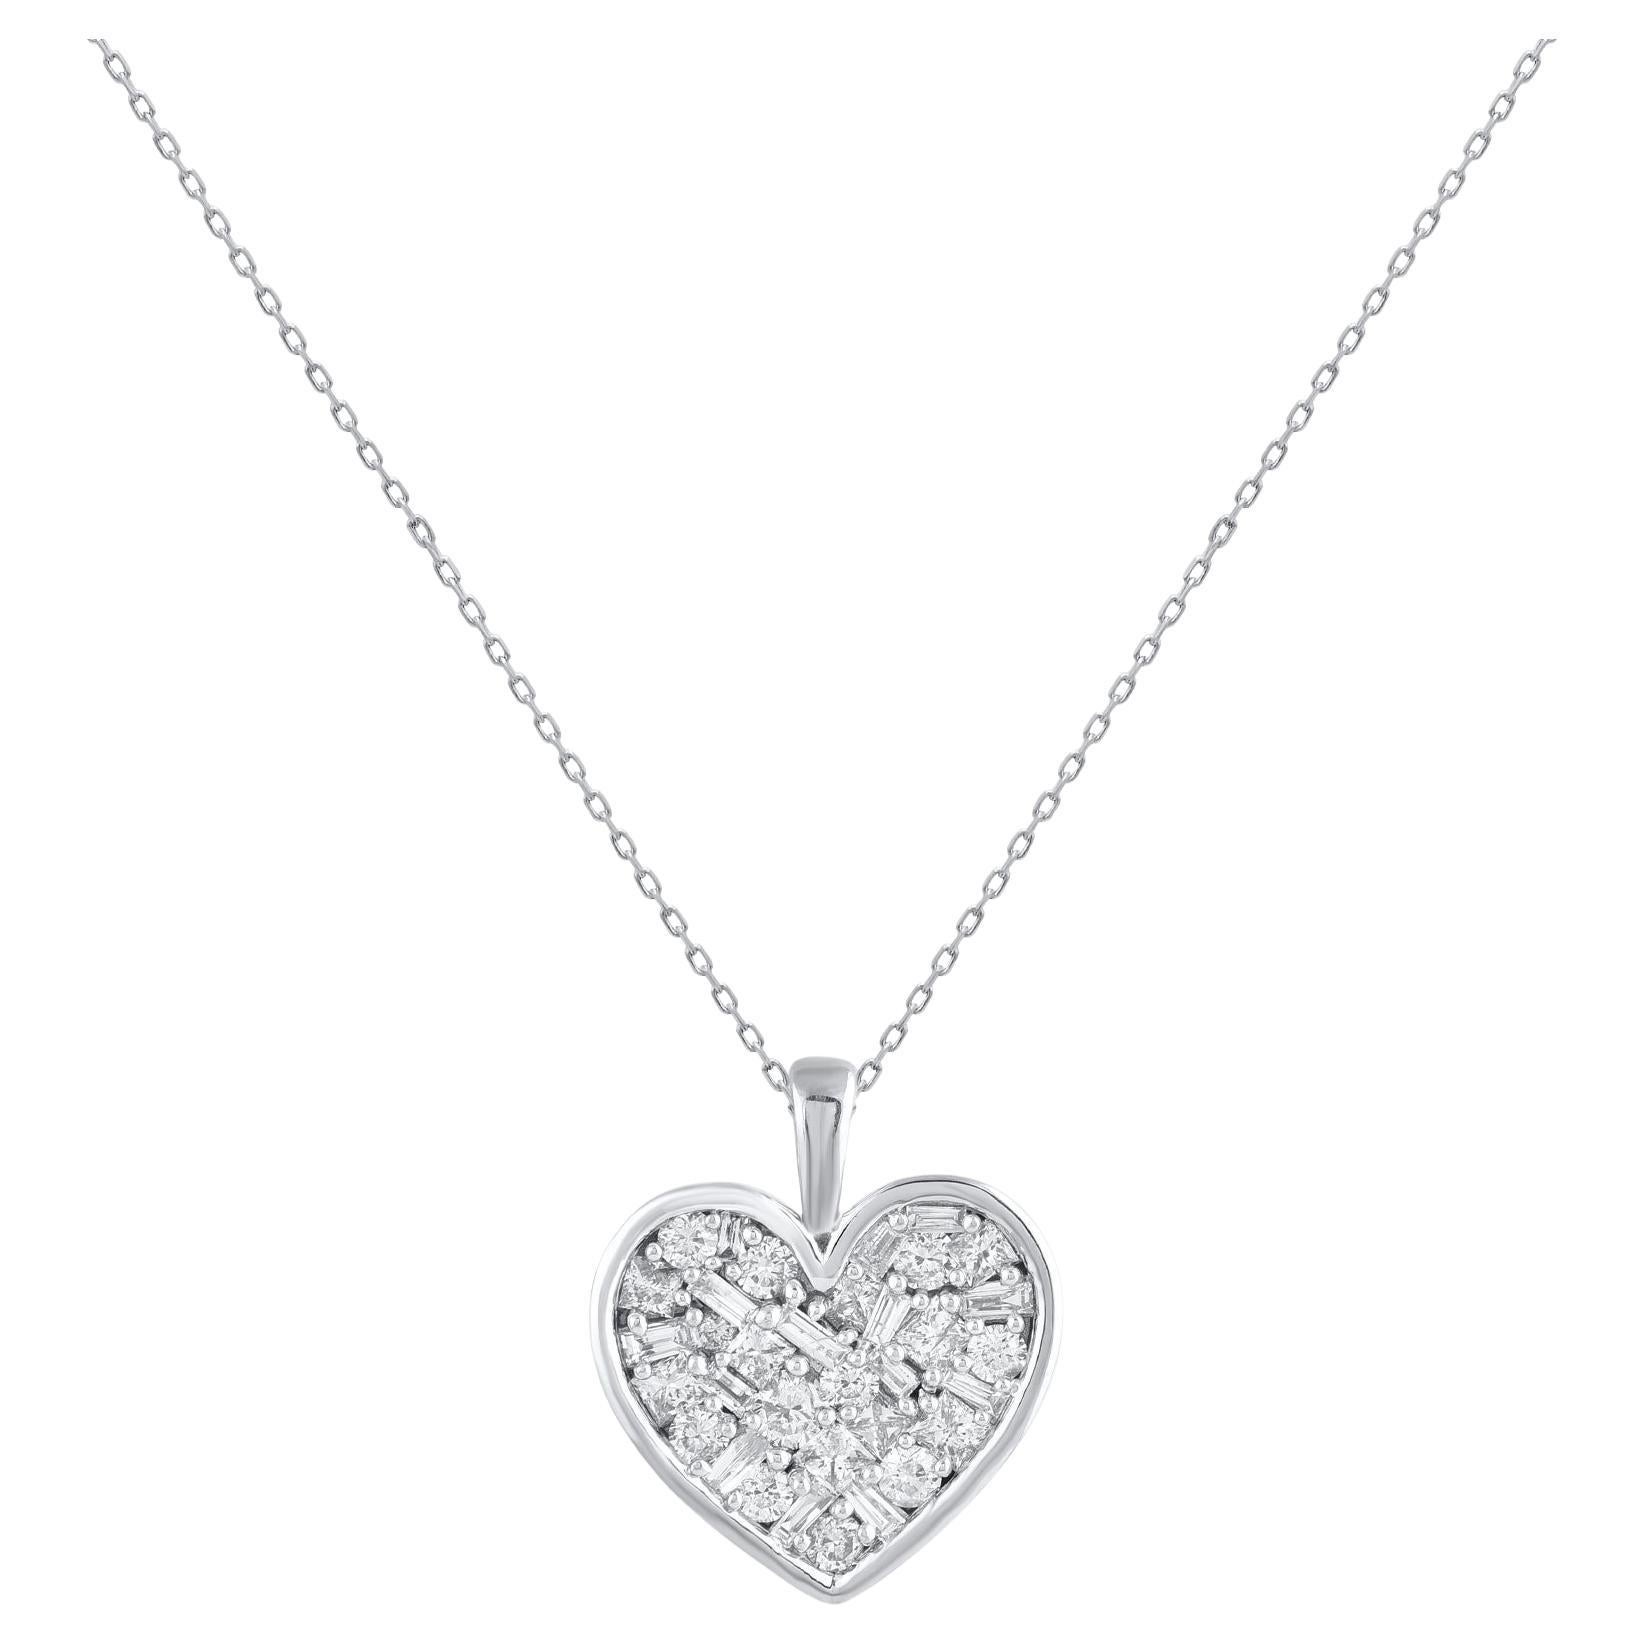 TJD 1.0 Carat Multi Stone Diamond Heart Pendant Necklace in 18 Karat White Gold